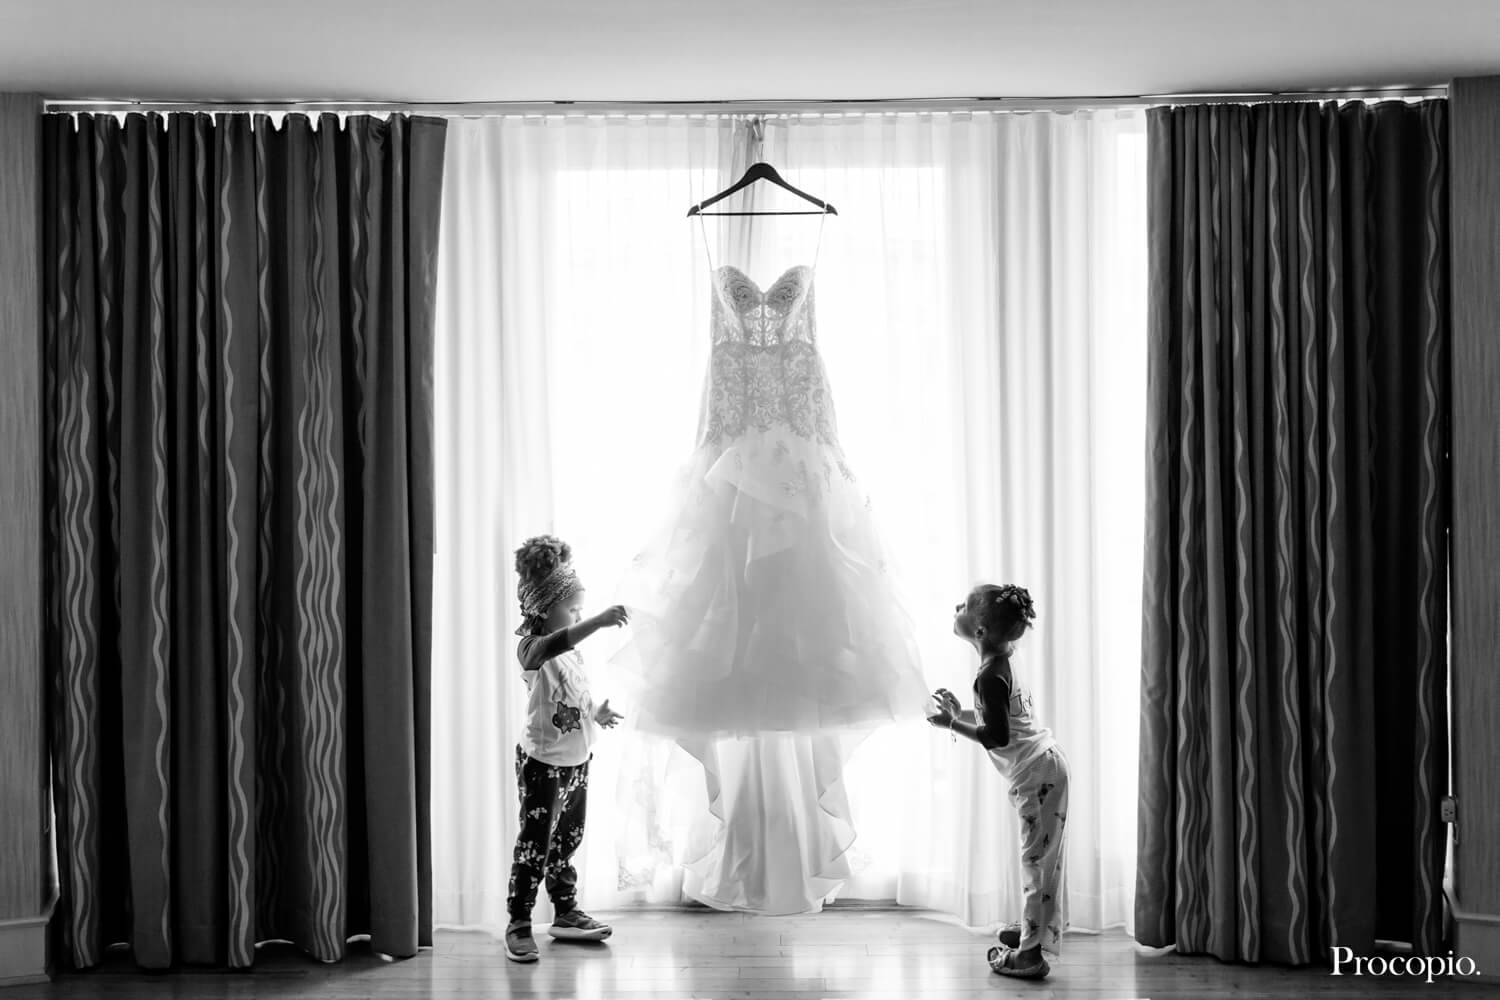 Little girls gazing at wedding dress  - Perfect Planning Events - best Washington DC wedding planner - photo by Procopio Photography